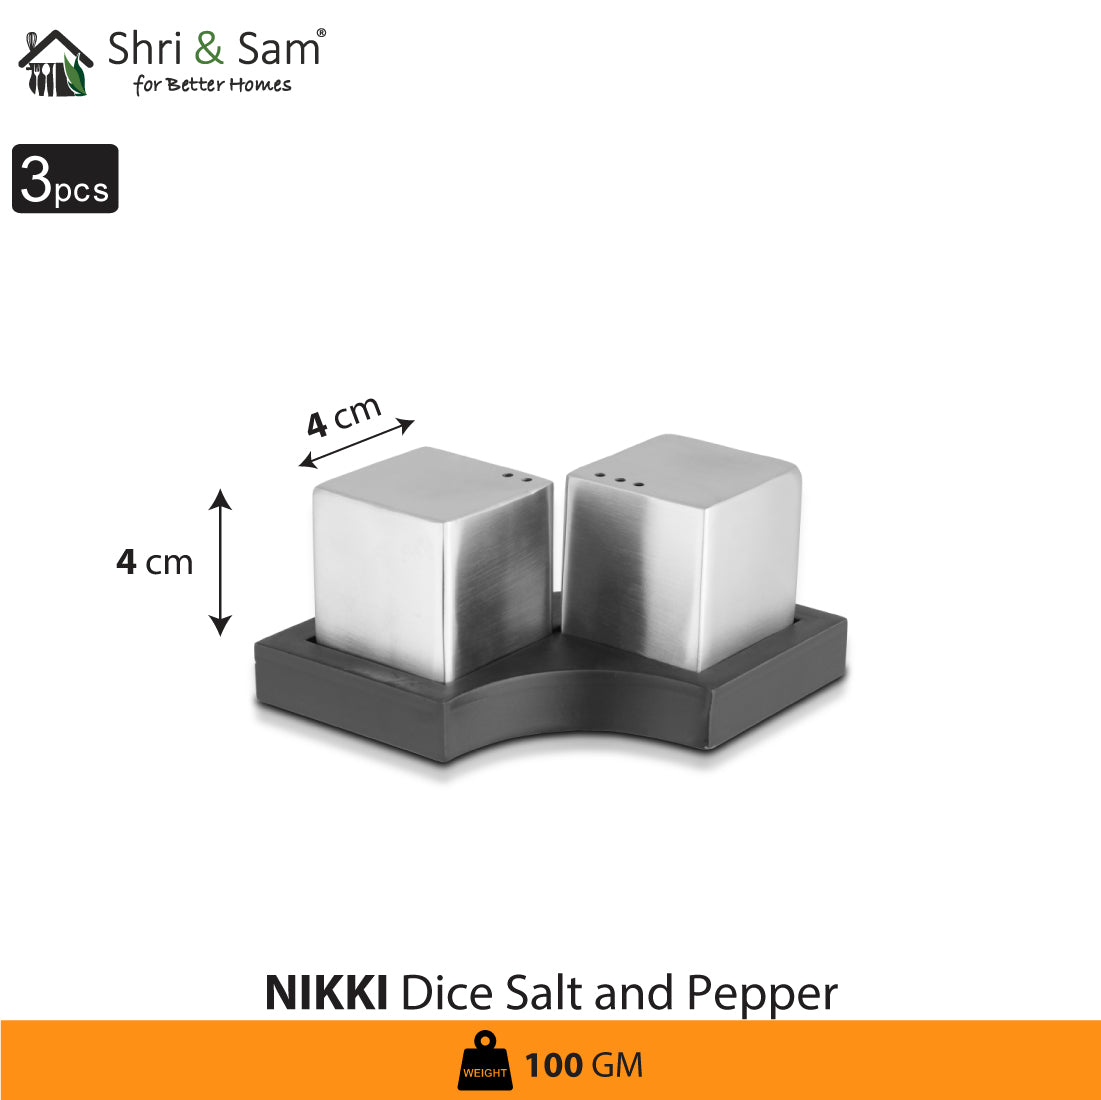 Jagdamba Cutlery Pvt Ltd. Daily Needs Dice Salt & Pepper - Nikki